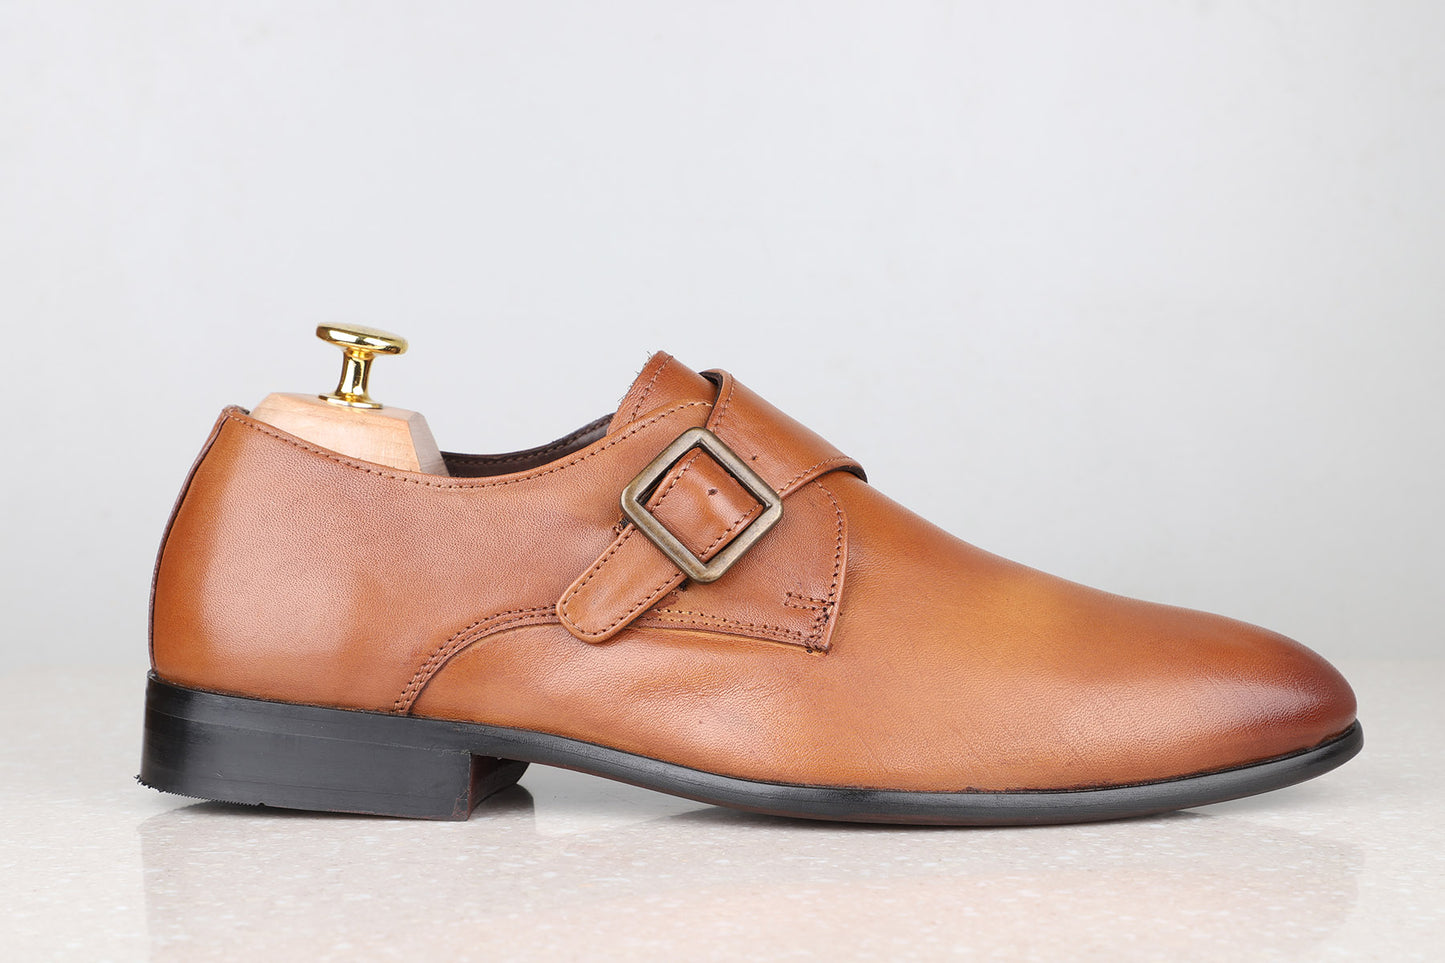 Atesber Monk Shoes For Men